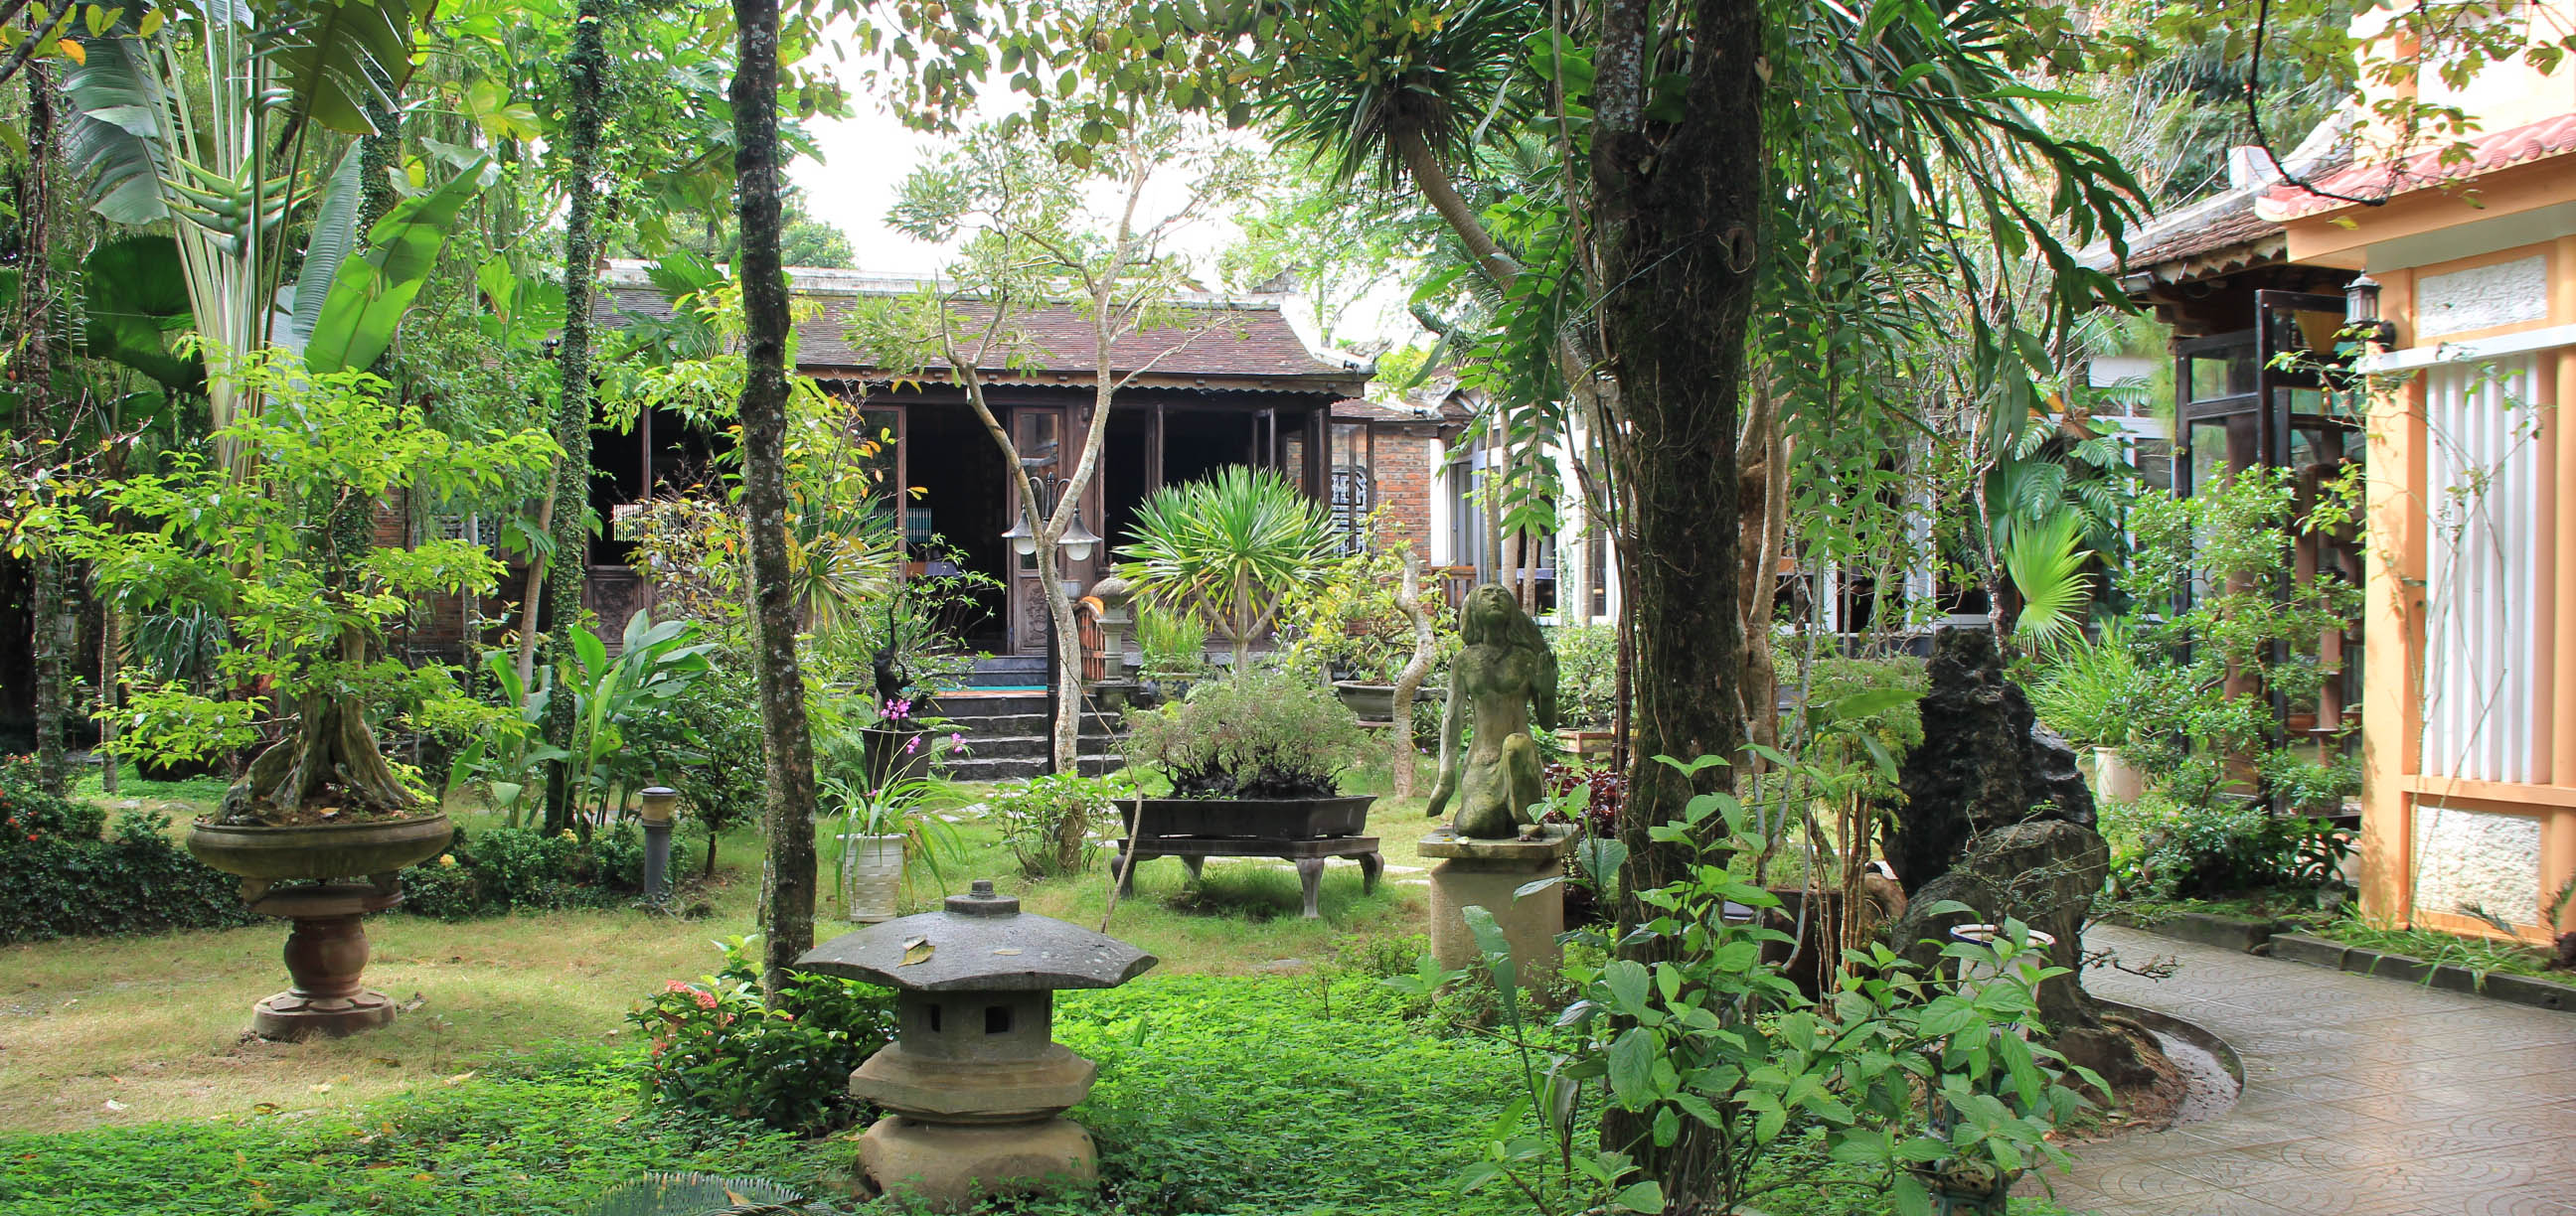 Ancient and poetic scene of Y Thao Garden restaurant